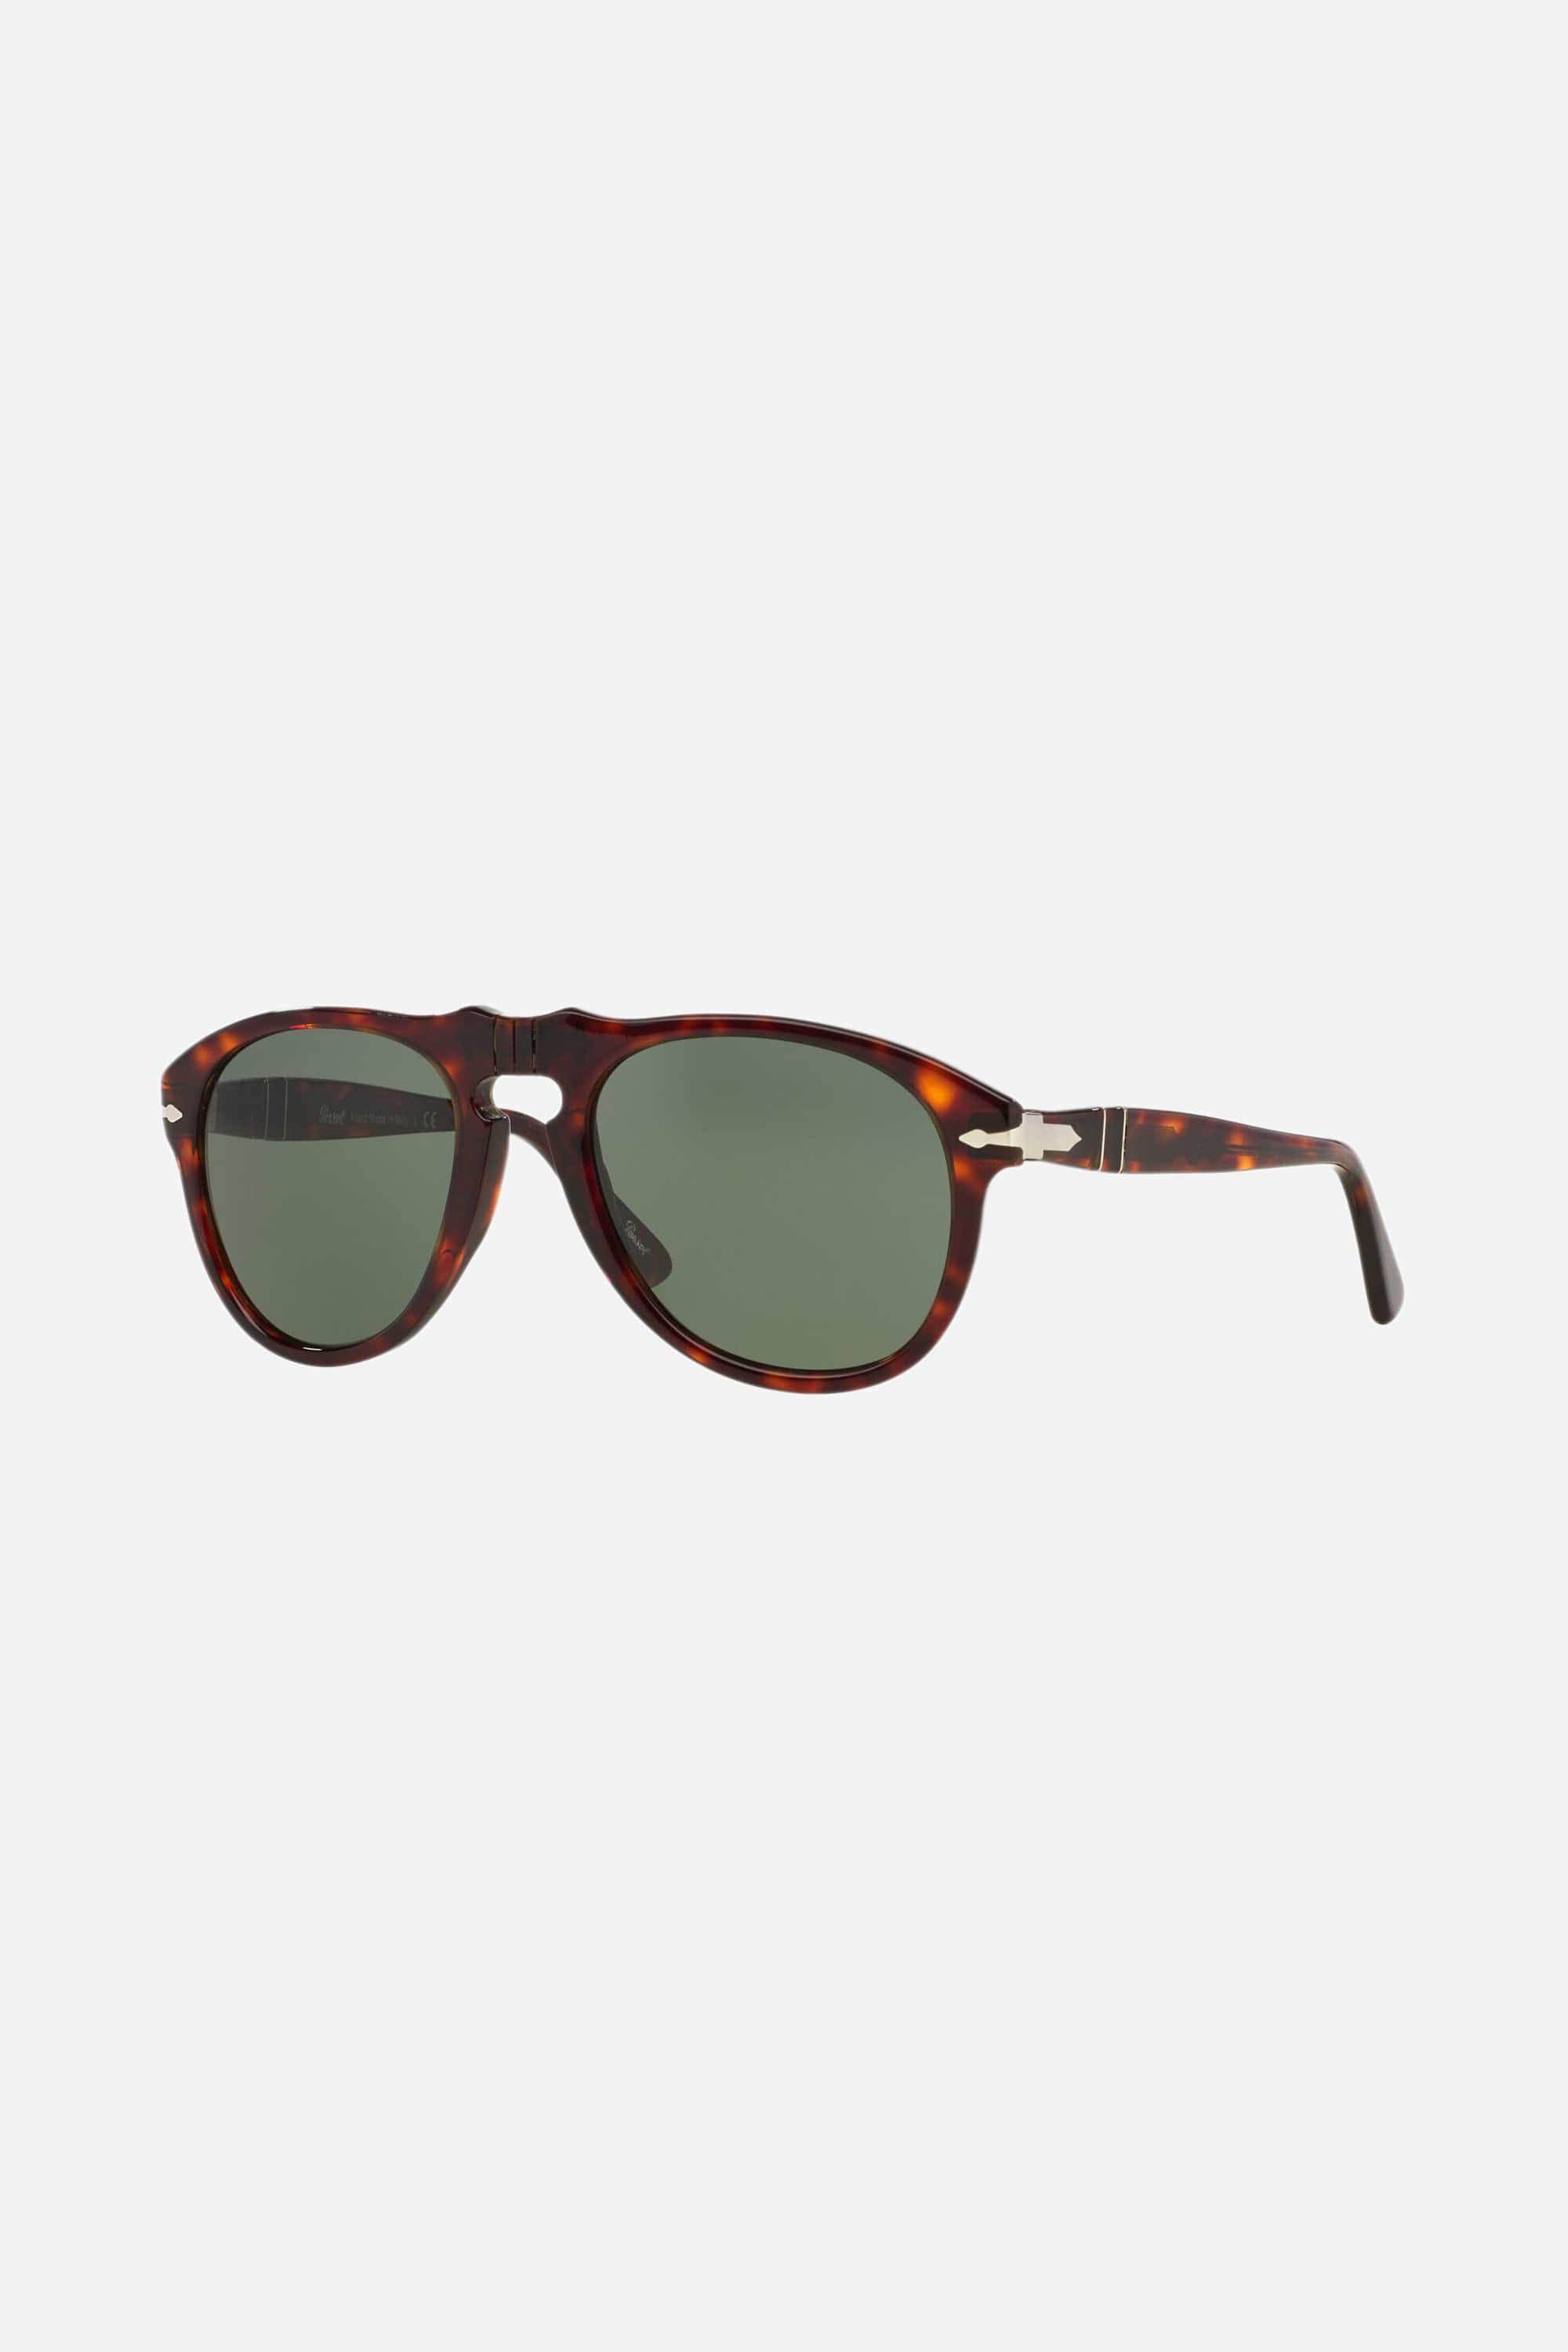 Persol pilot dark havana sunglasses - Eyewear Club